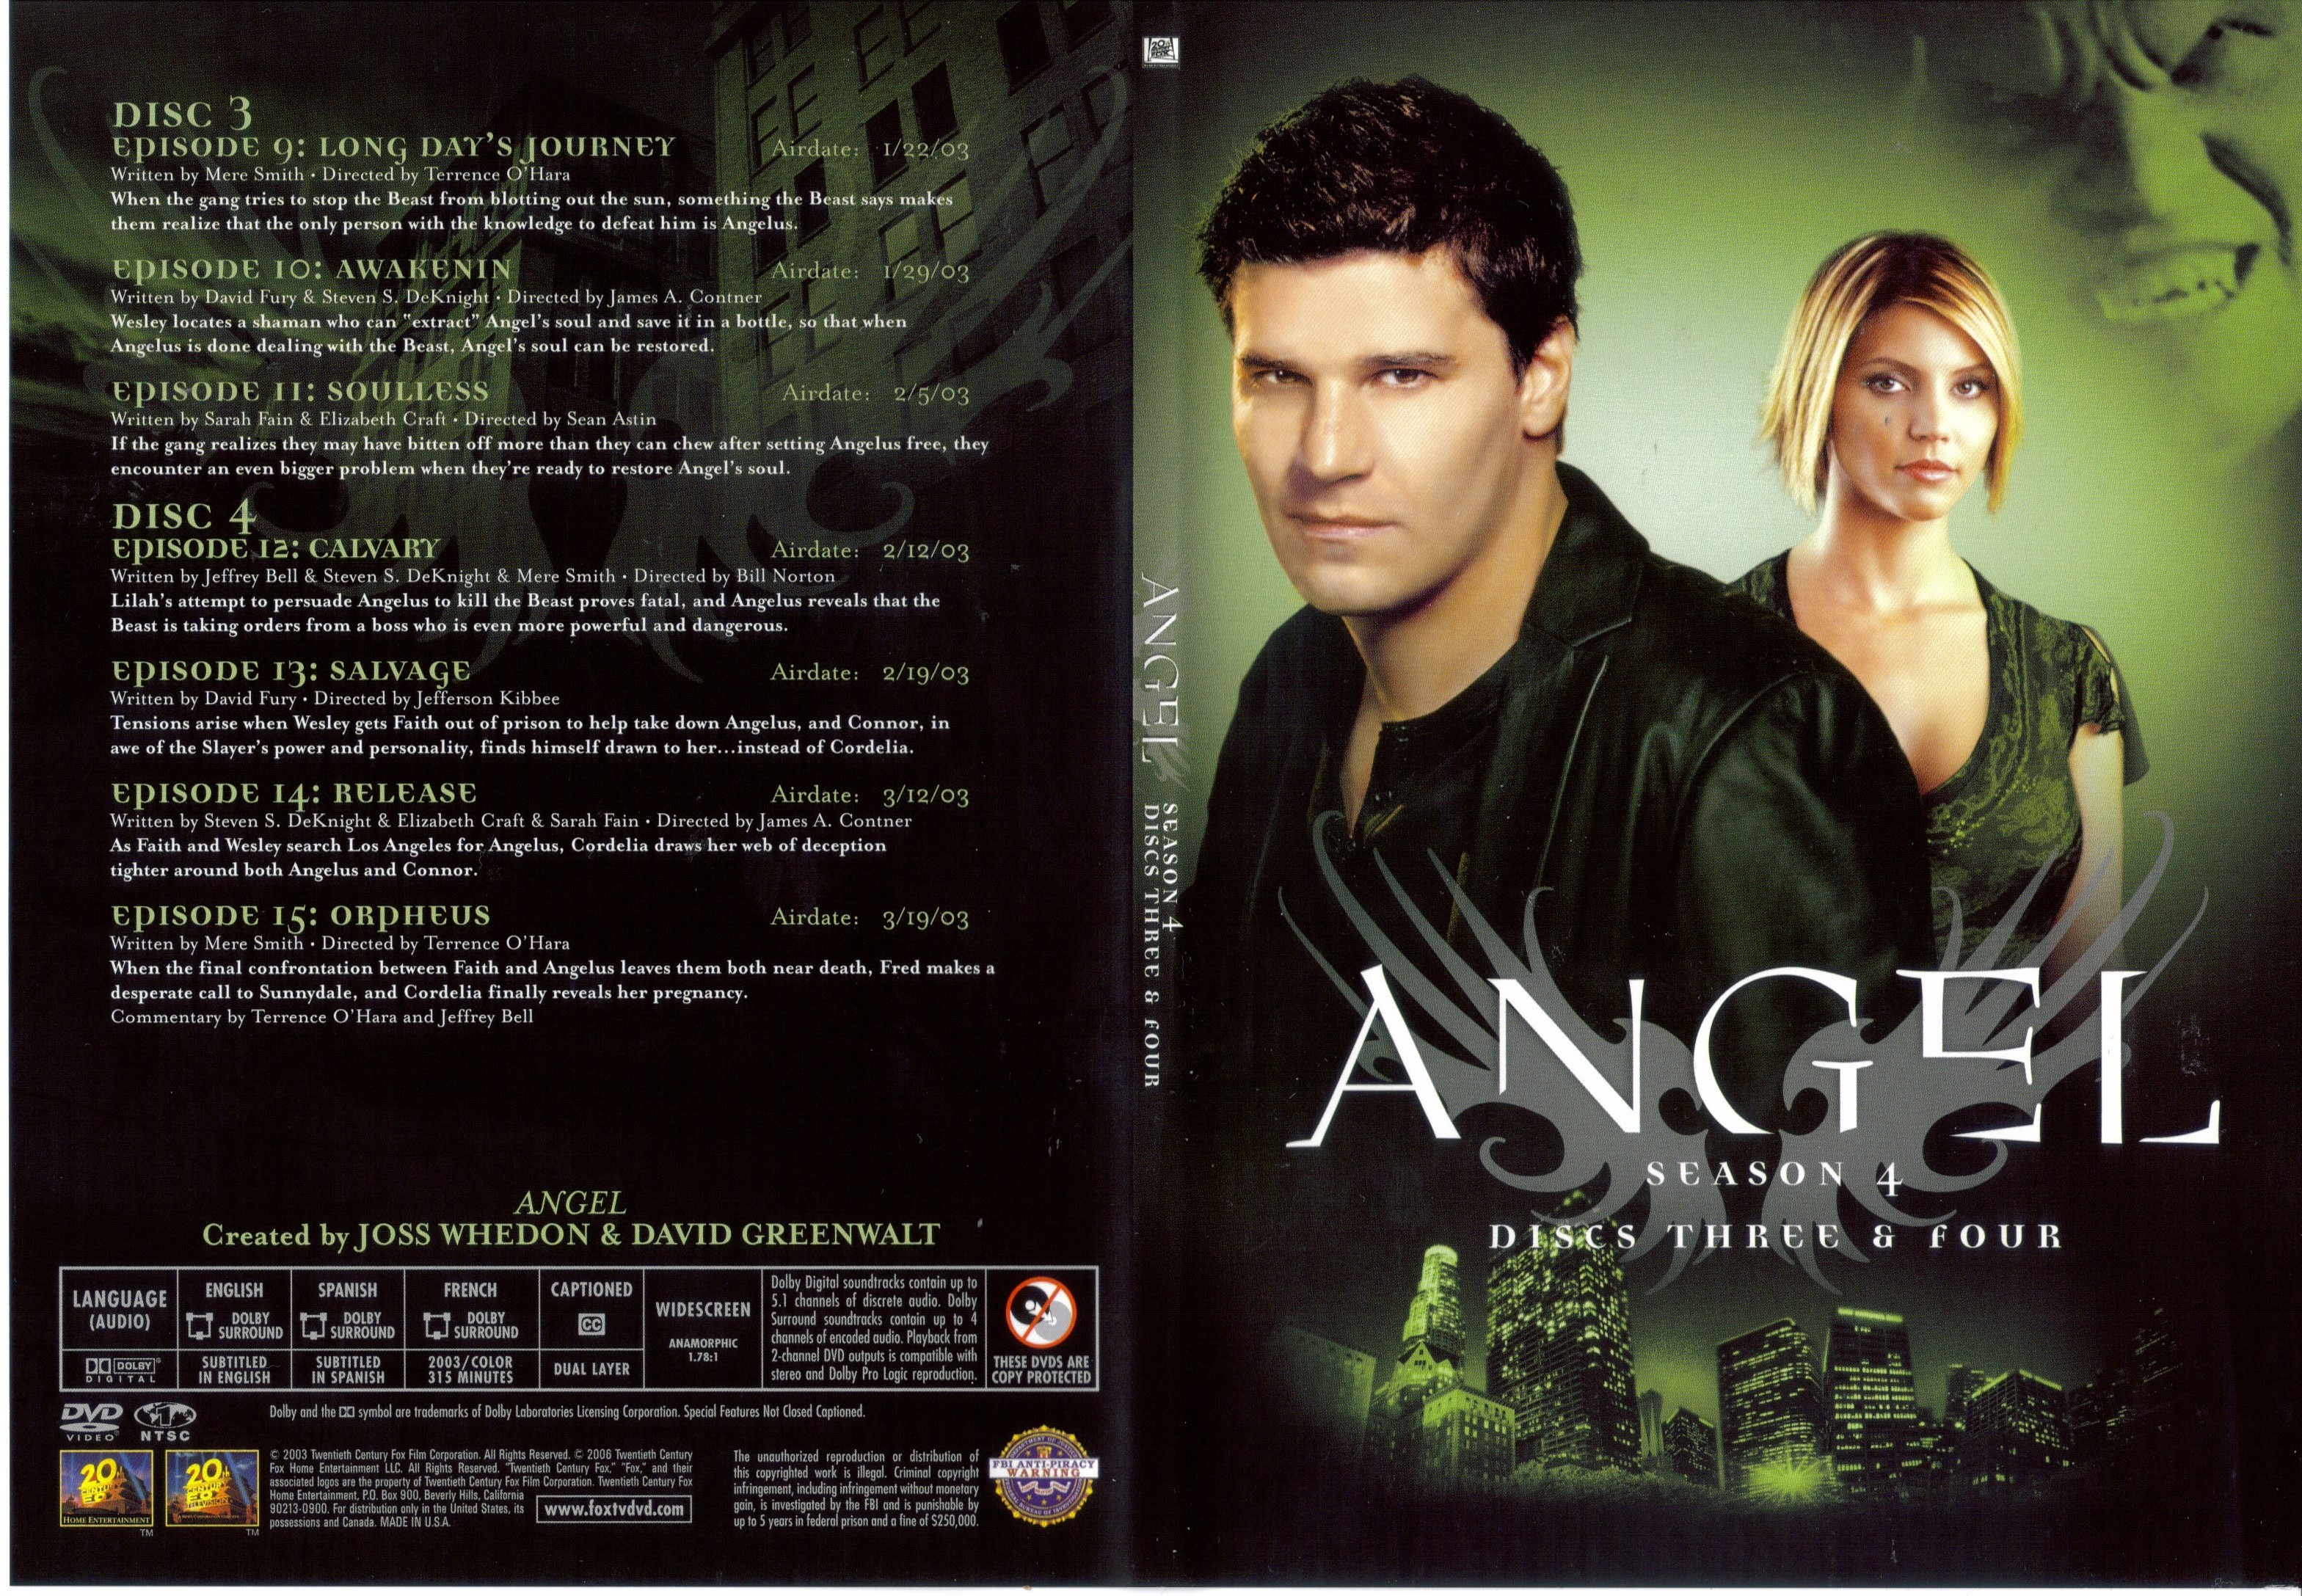 Jaquette DVD Angel Saison 4 DVD 2 (Canadienne)